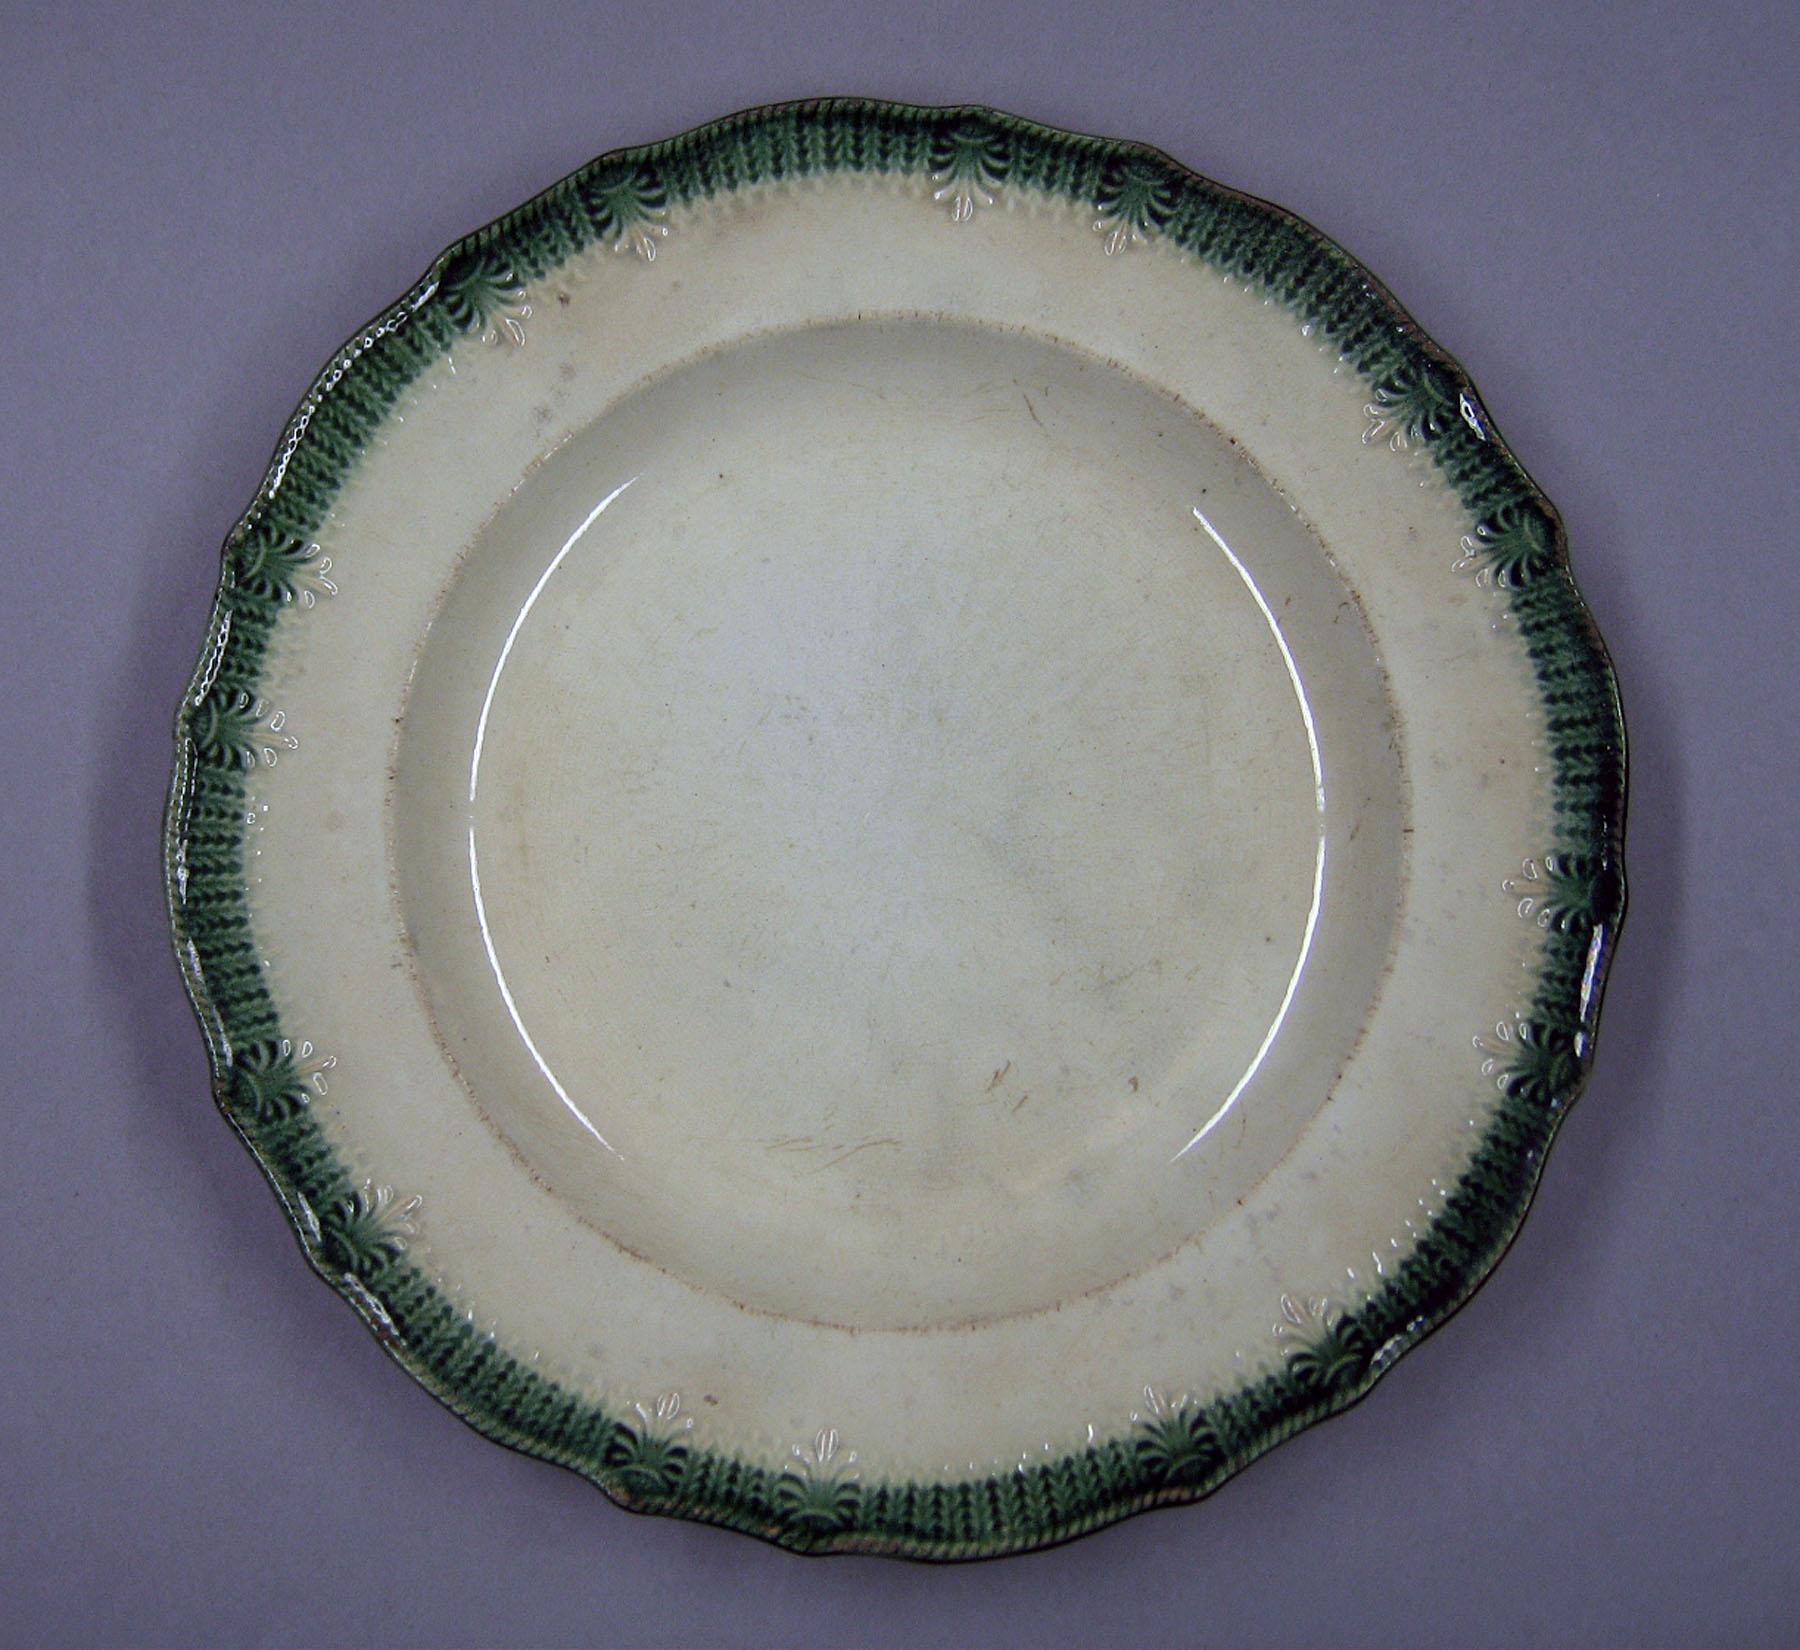 1969.0336 Stubbs pearlware plate